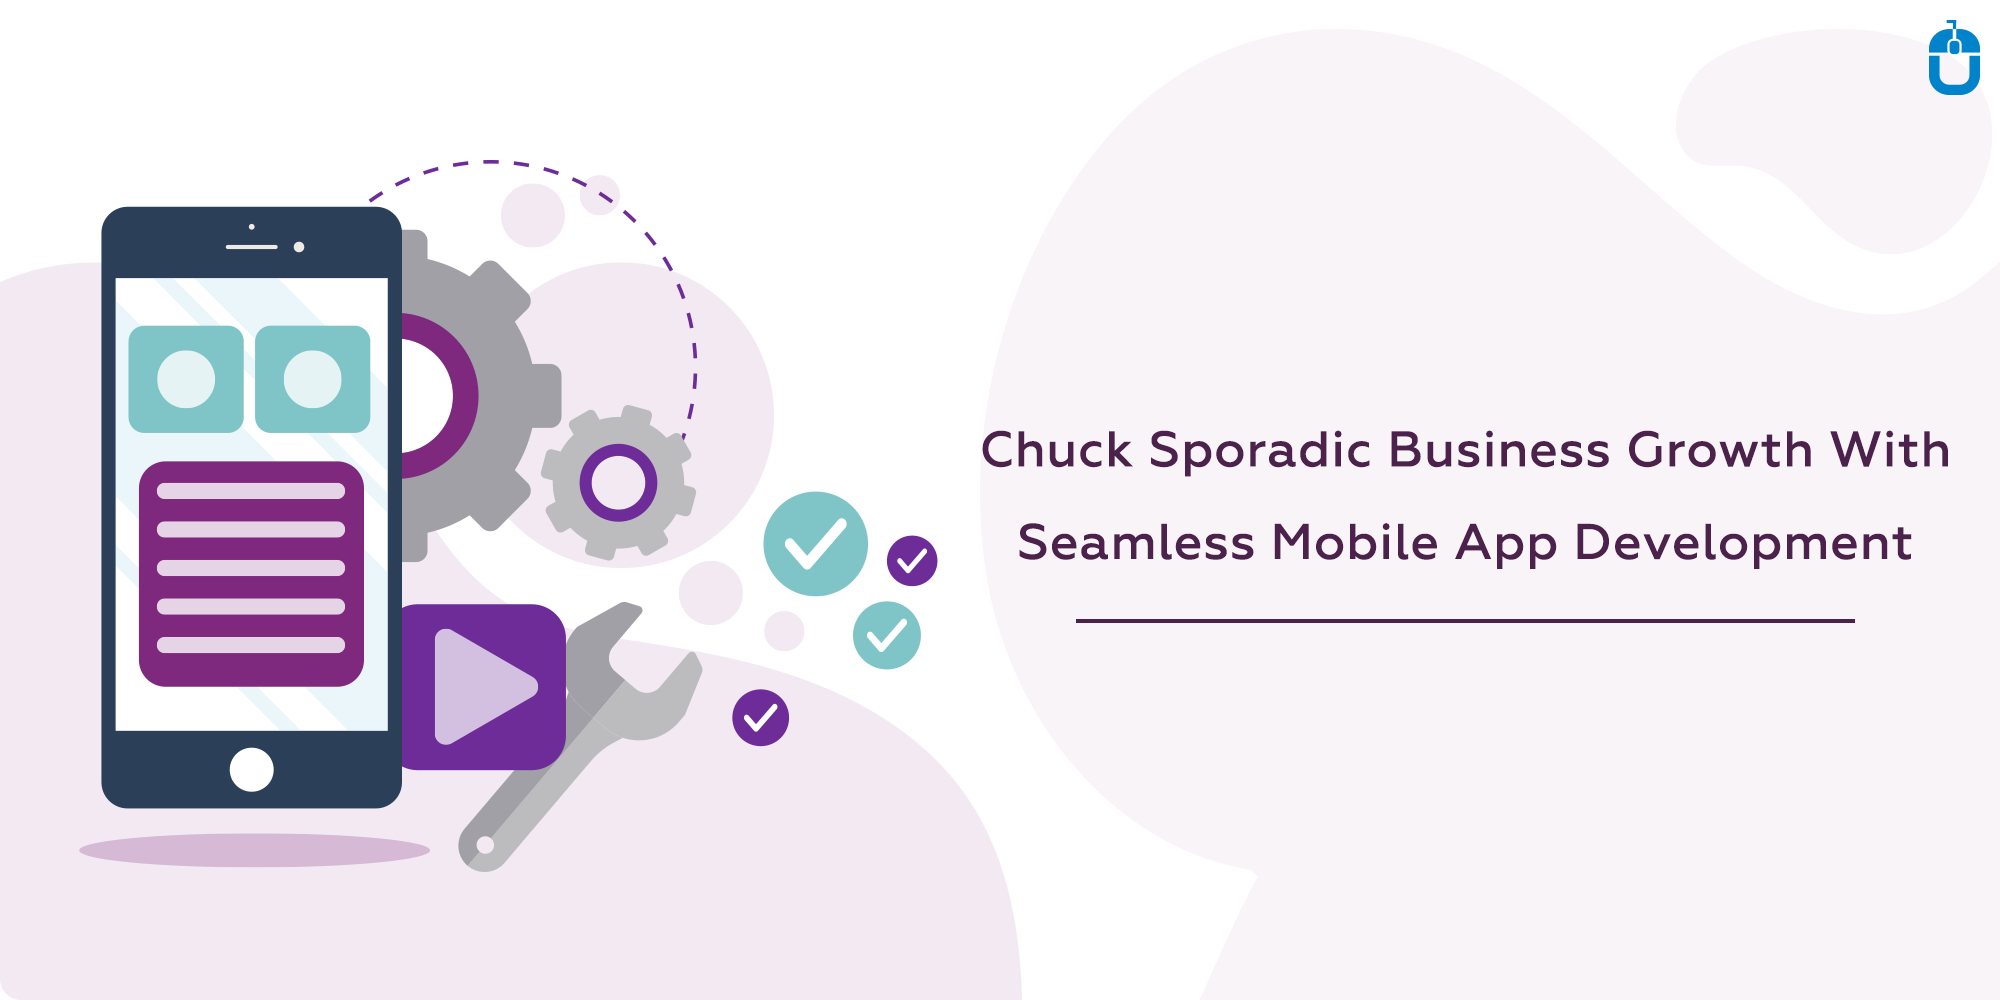 Chuck Sporadic Business Growth With Seamless Mobile App Development